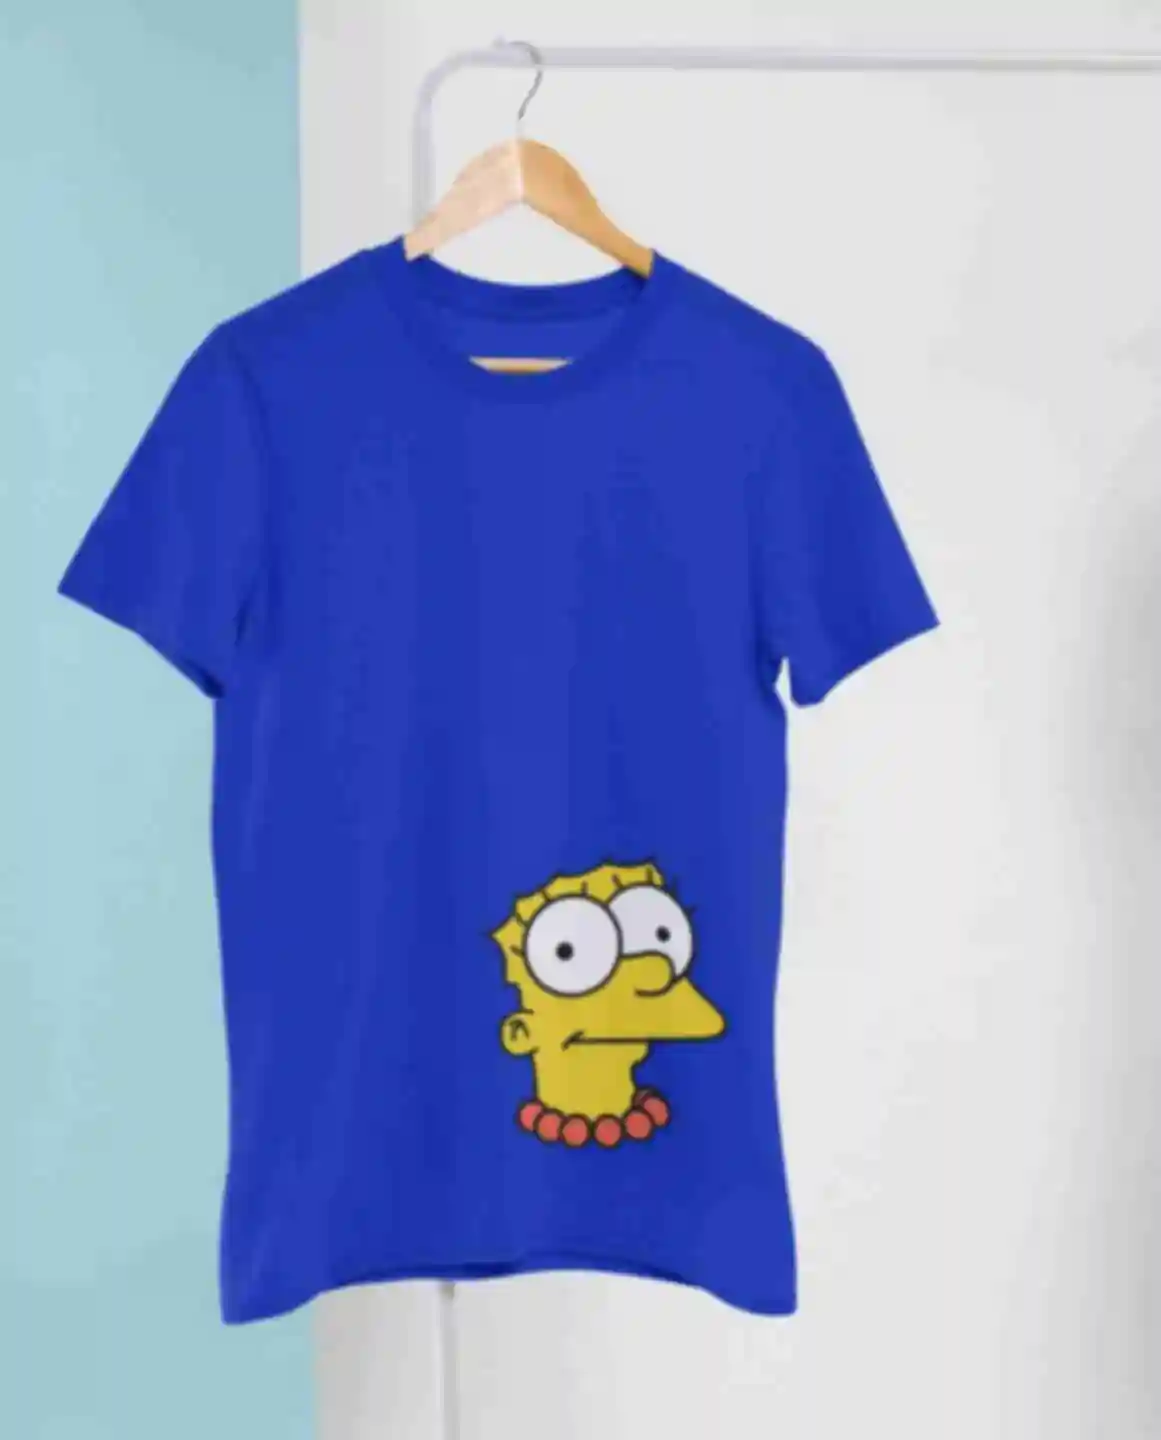 Футболка №9 • Мардж Сімпсон • Мерч • Одяг за мультсеріалом • Сімпсони • The Simpsons